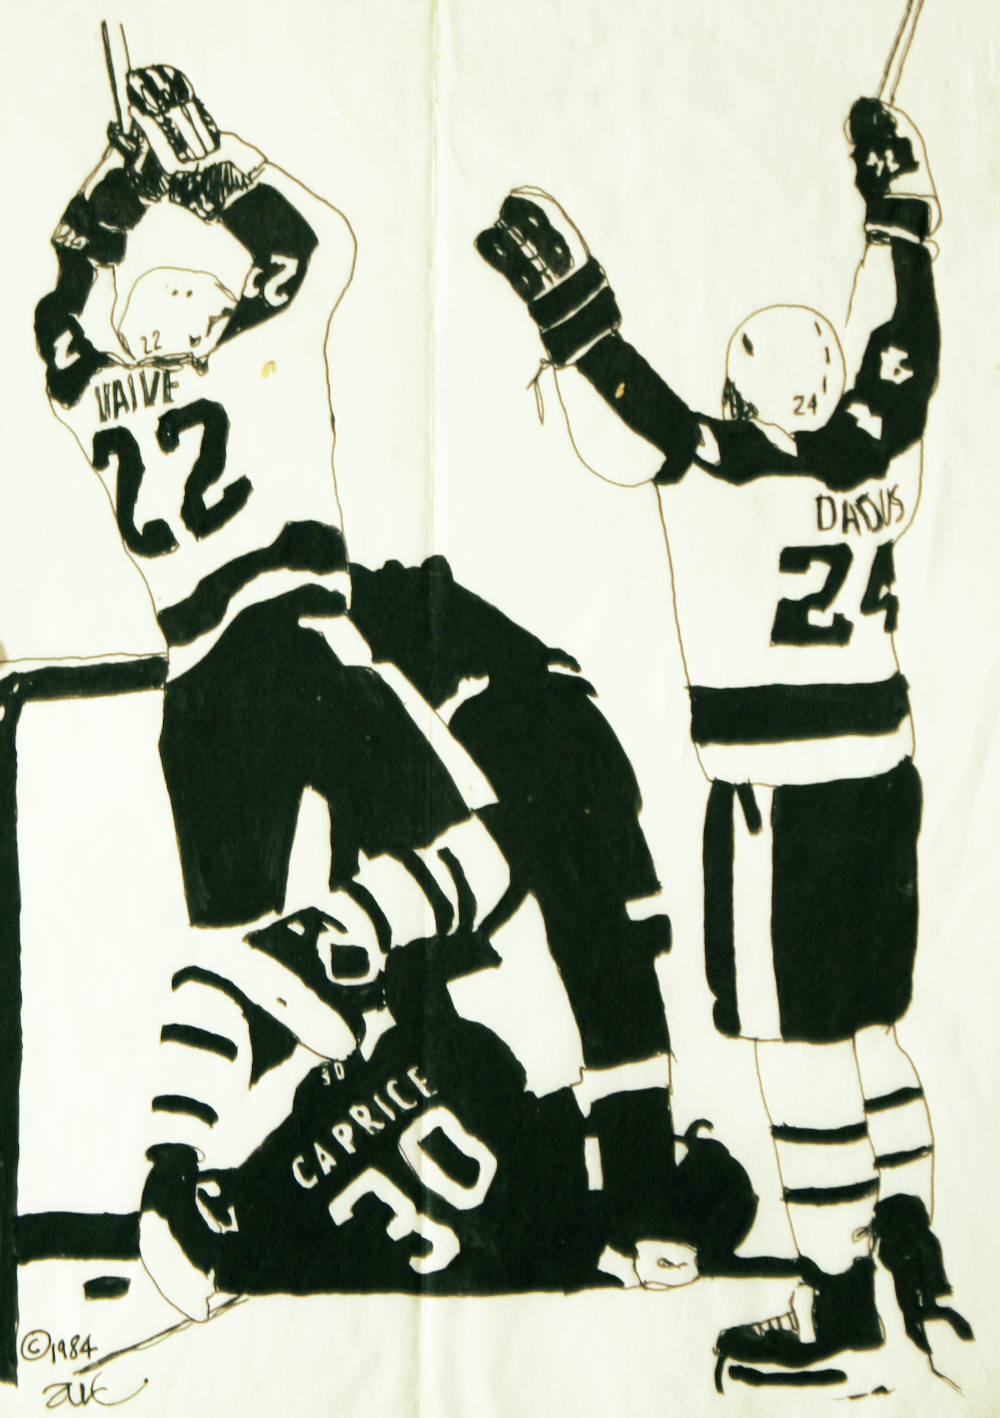 Leafs Score-original drawing using ink by cork freelance artist, web site designer and developer